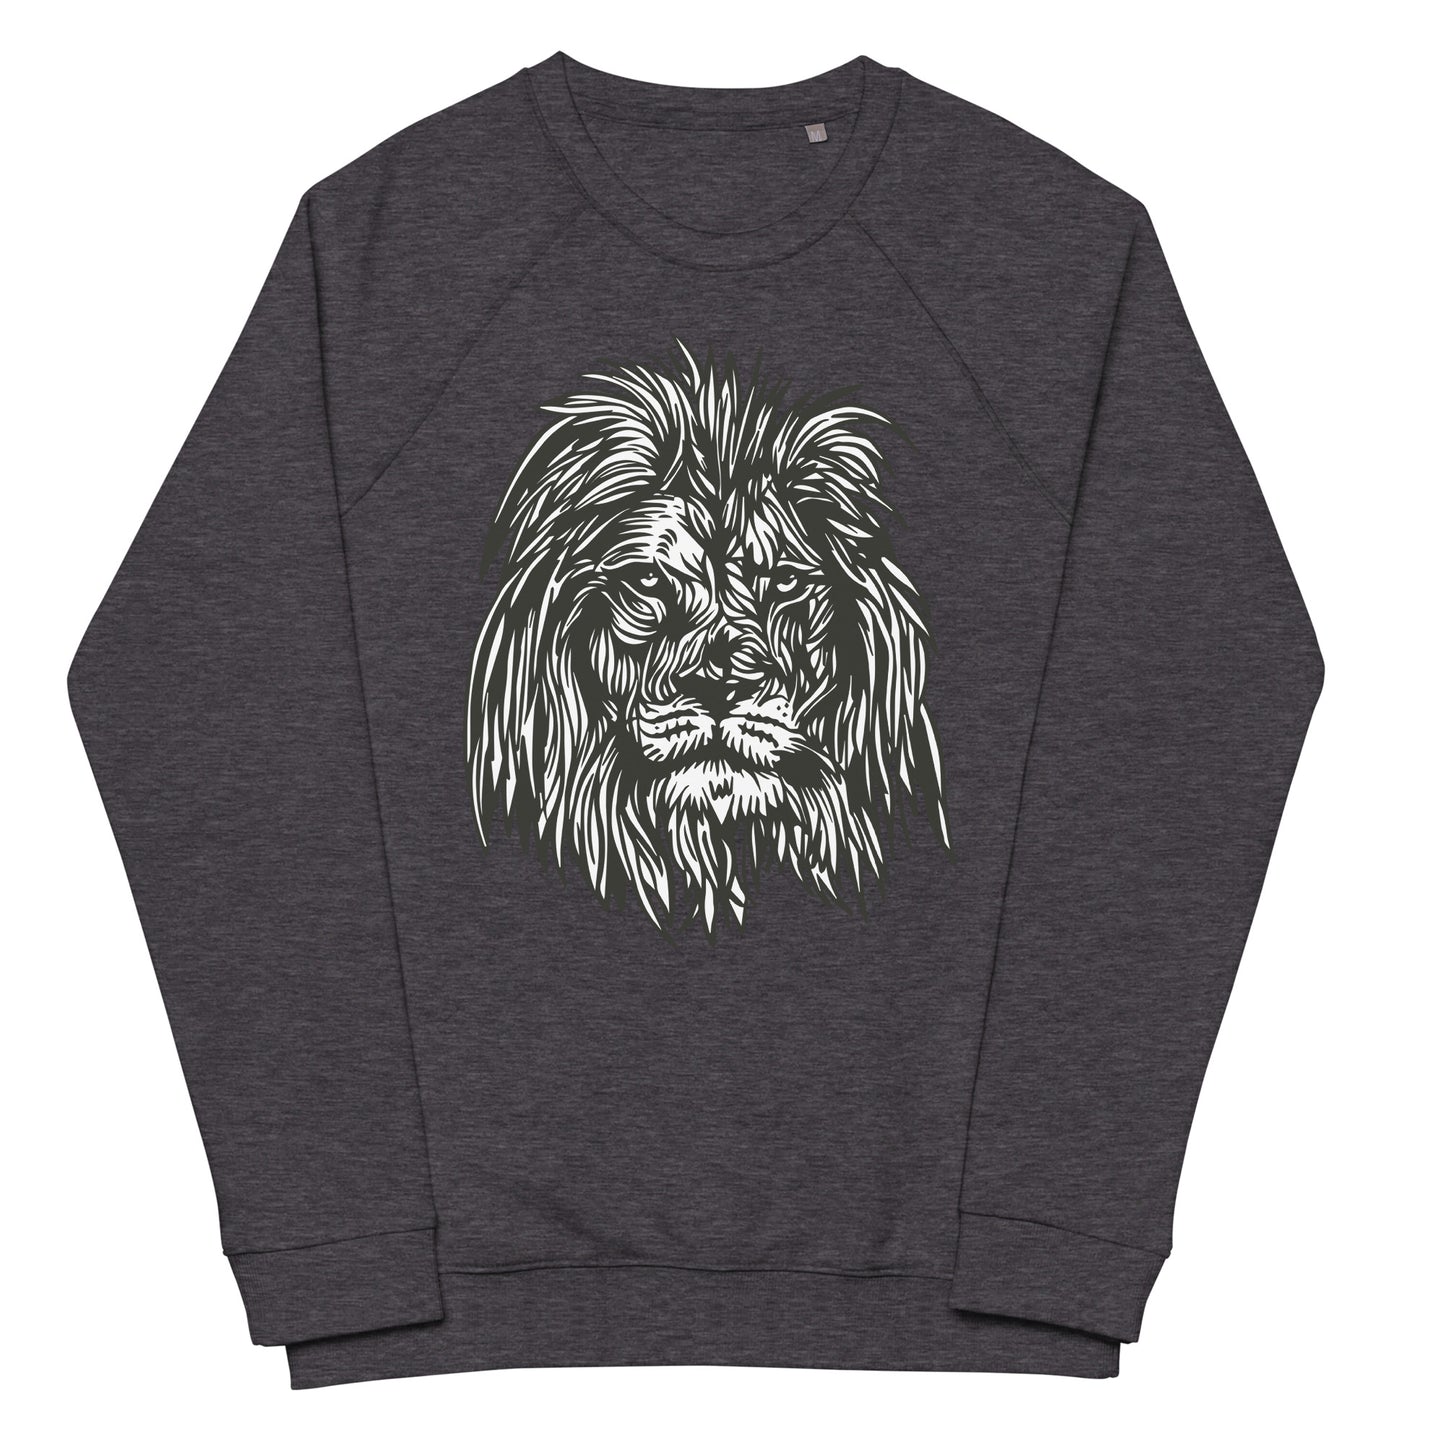 King of the Jungle raglan sweatshirt